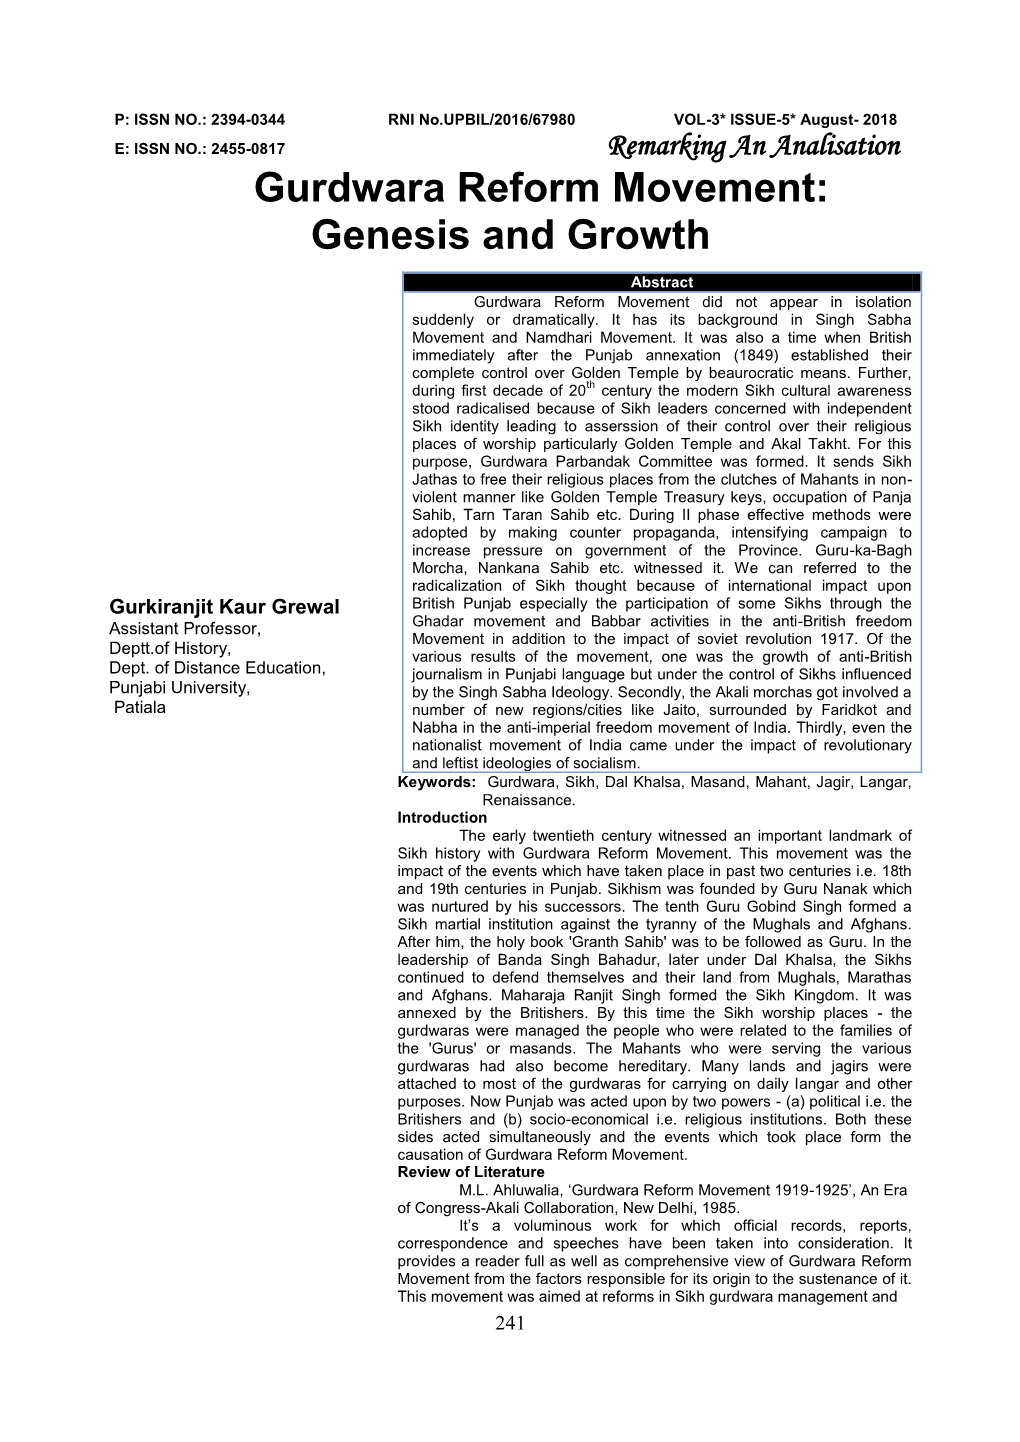 Gurdwara Reform Movement: Genesis and Growth